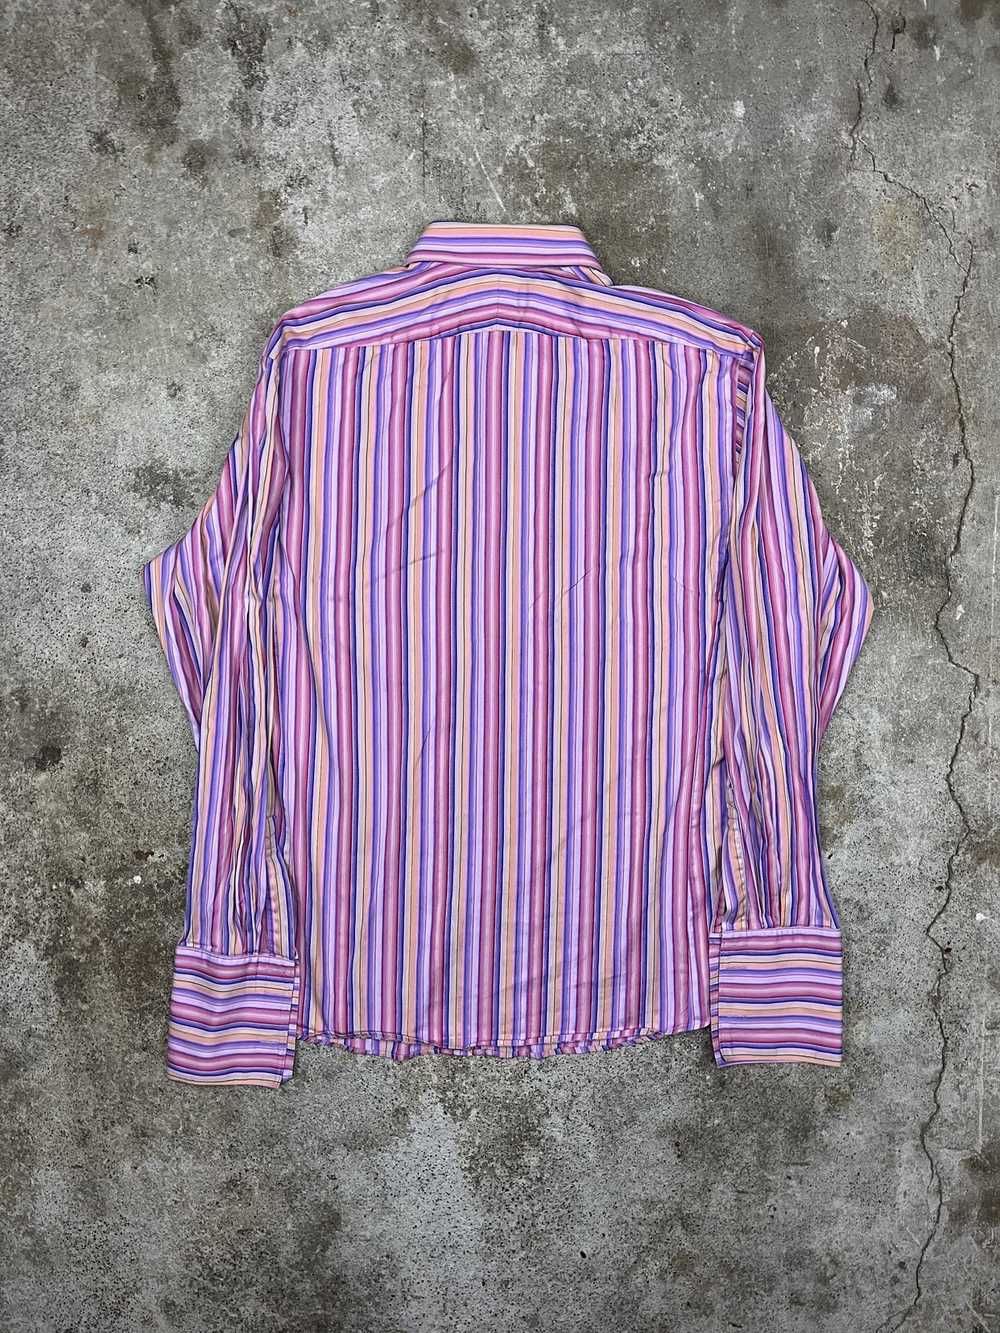 Thomas Pink Womens Jermyn Street London Button Down Shirt Long Sleeve 12 New